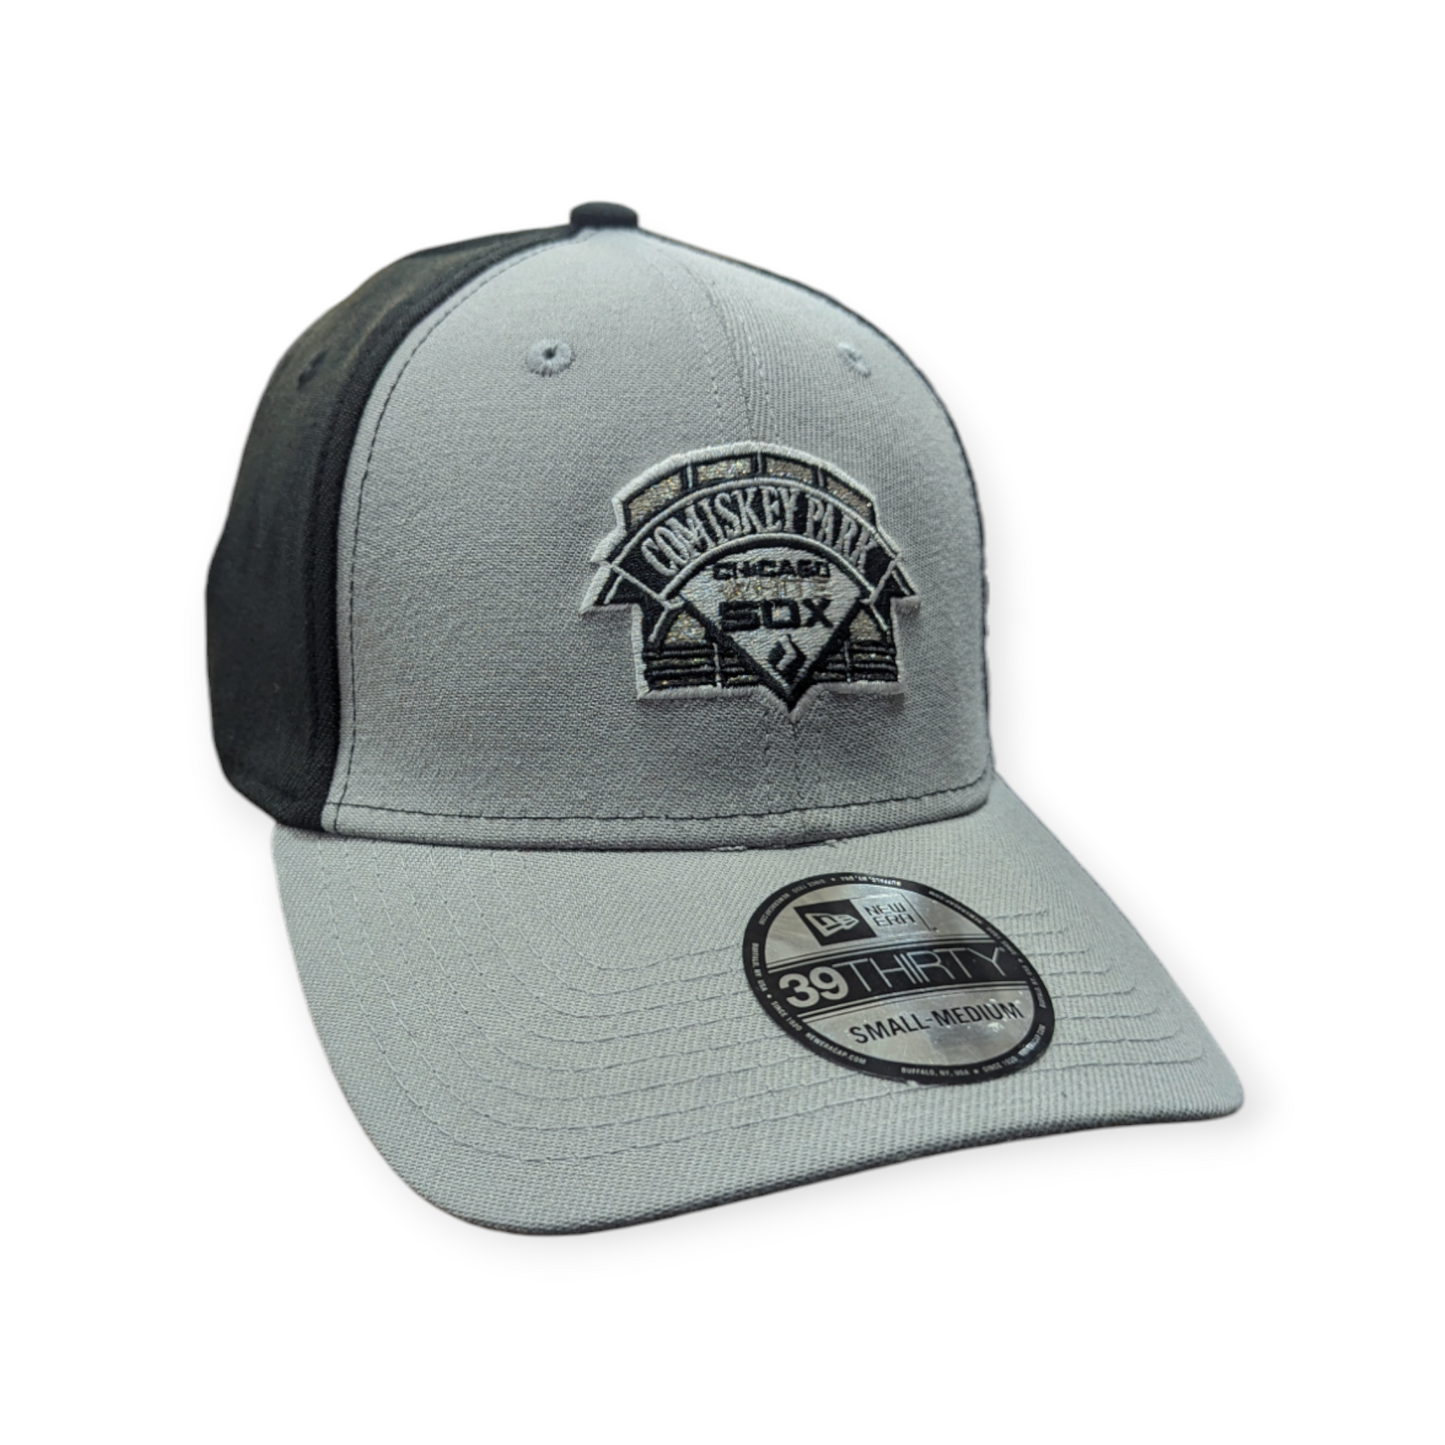 Chicago White Sox Comiskey Park Gray/Black 39THIRTY Flex Fit New Era Hat